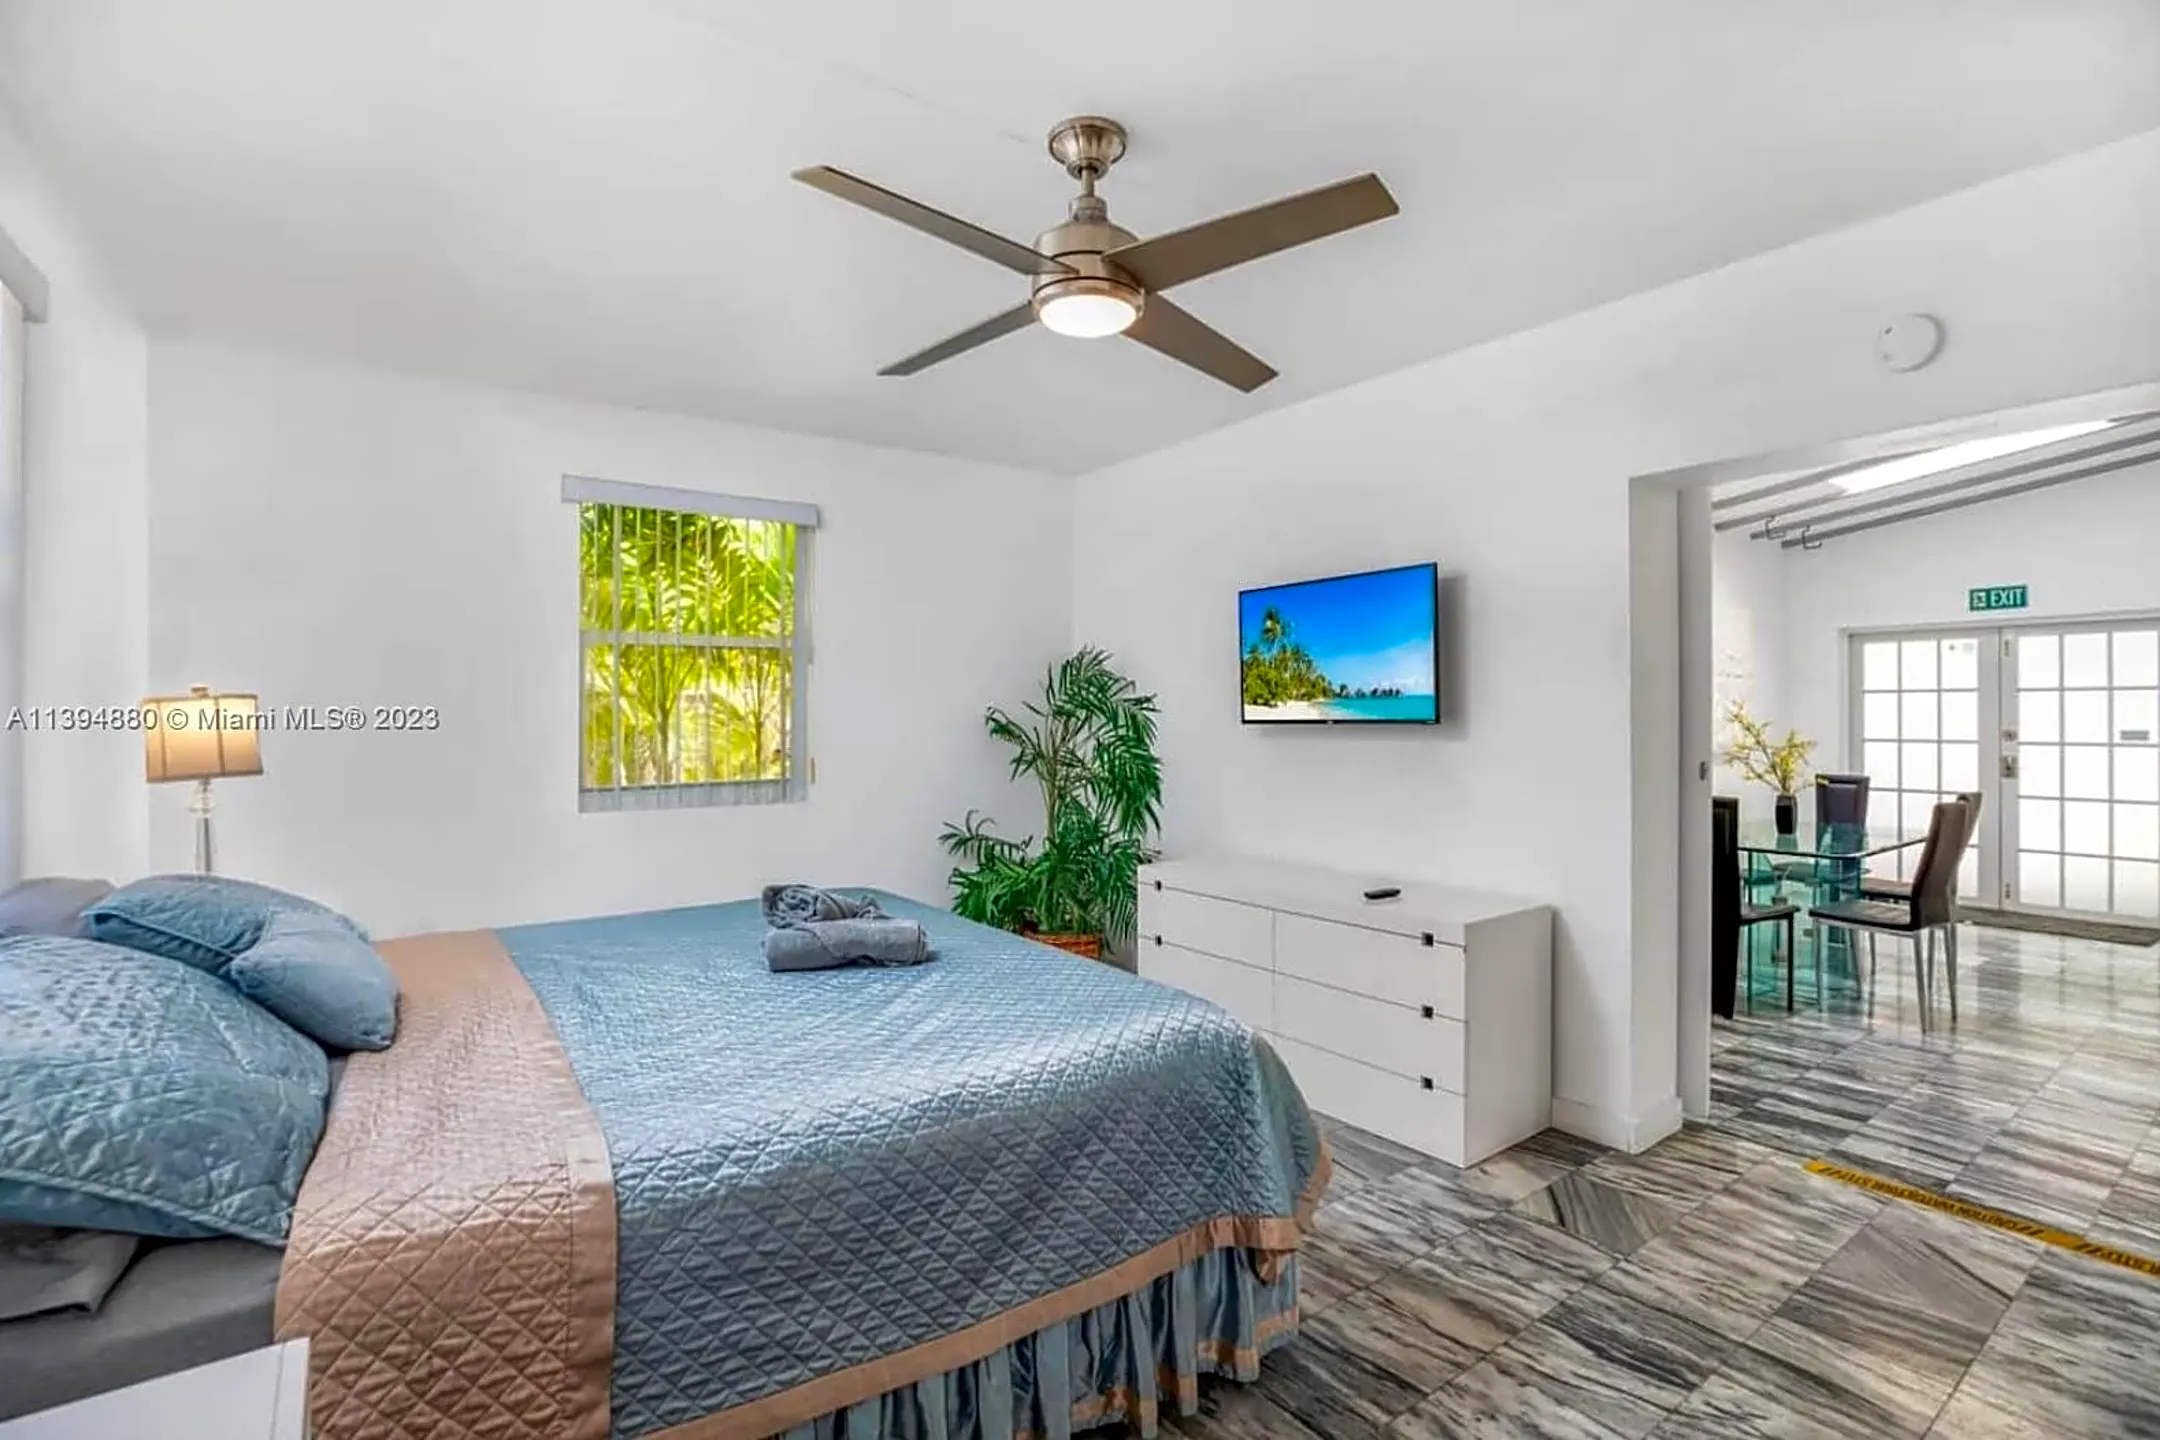 Bedroom - 910 NE 81st St #FRONT - Miami, FL